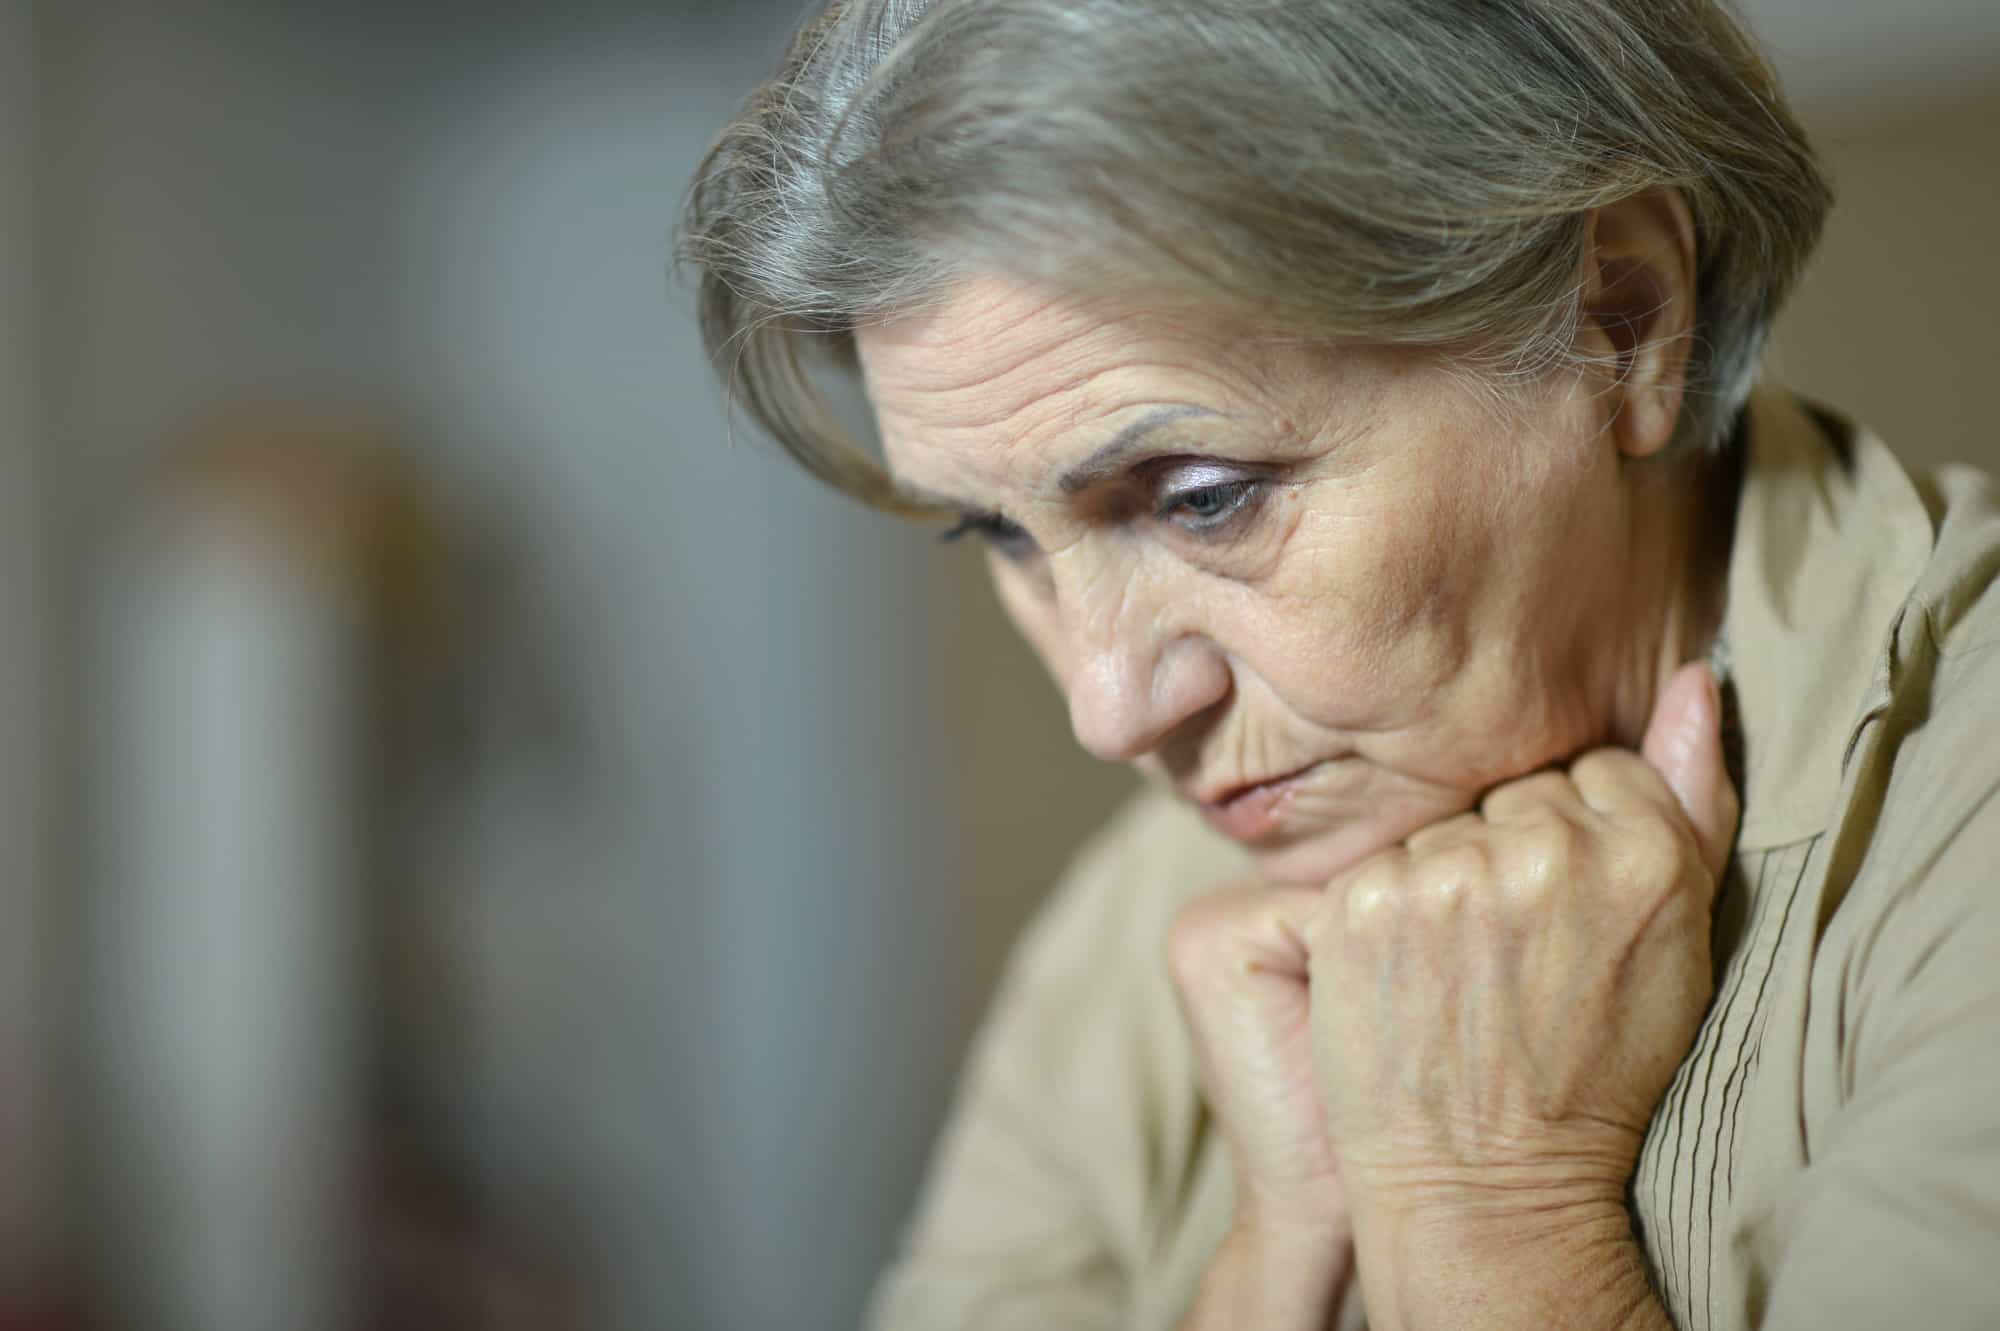 Old sad woman, nursing home neglect